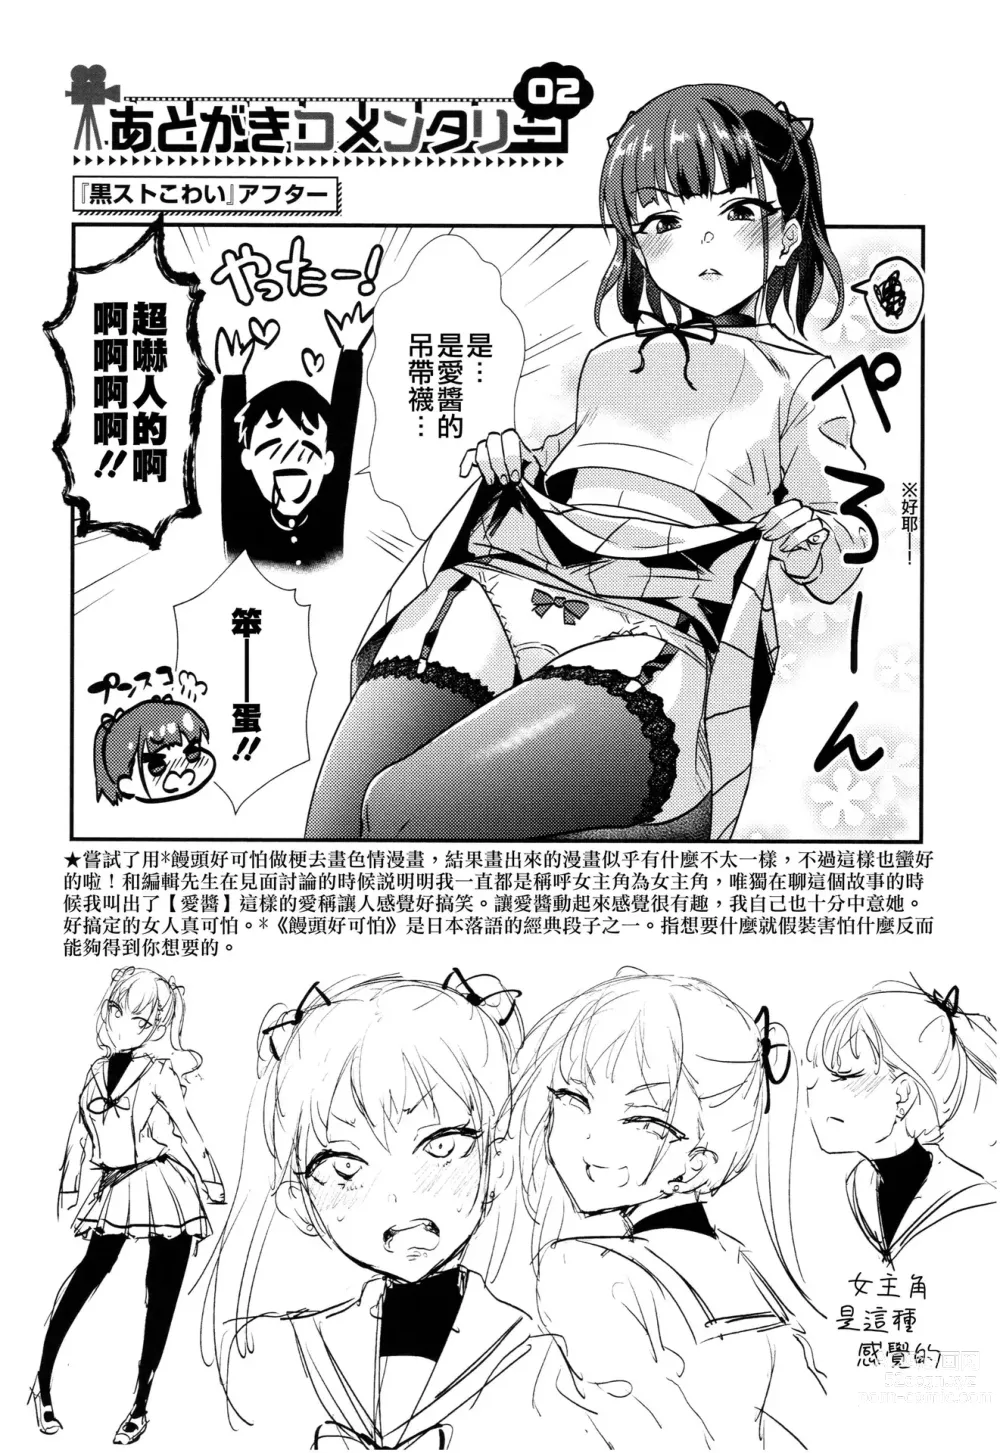 Page 187 of manga Otome Initiative - Girls Initiative (uncensored)